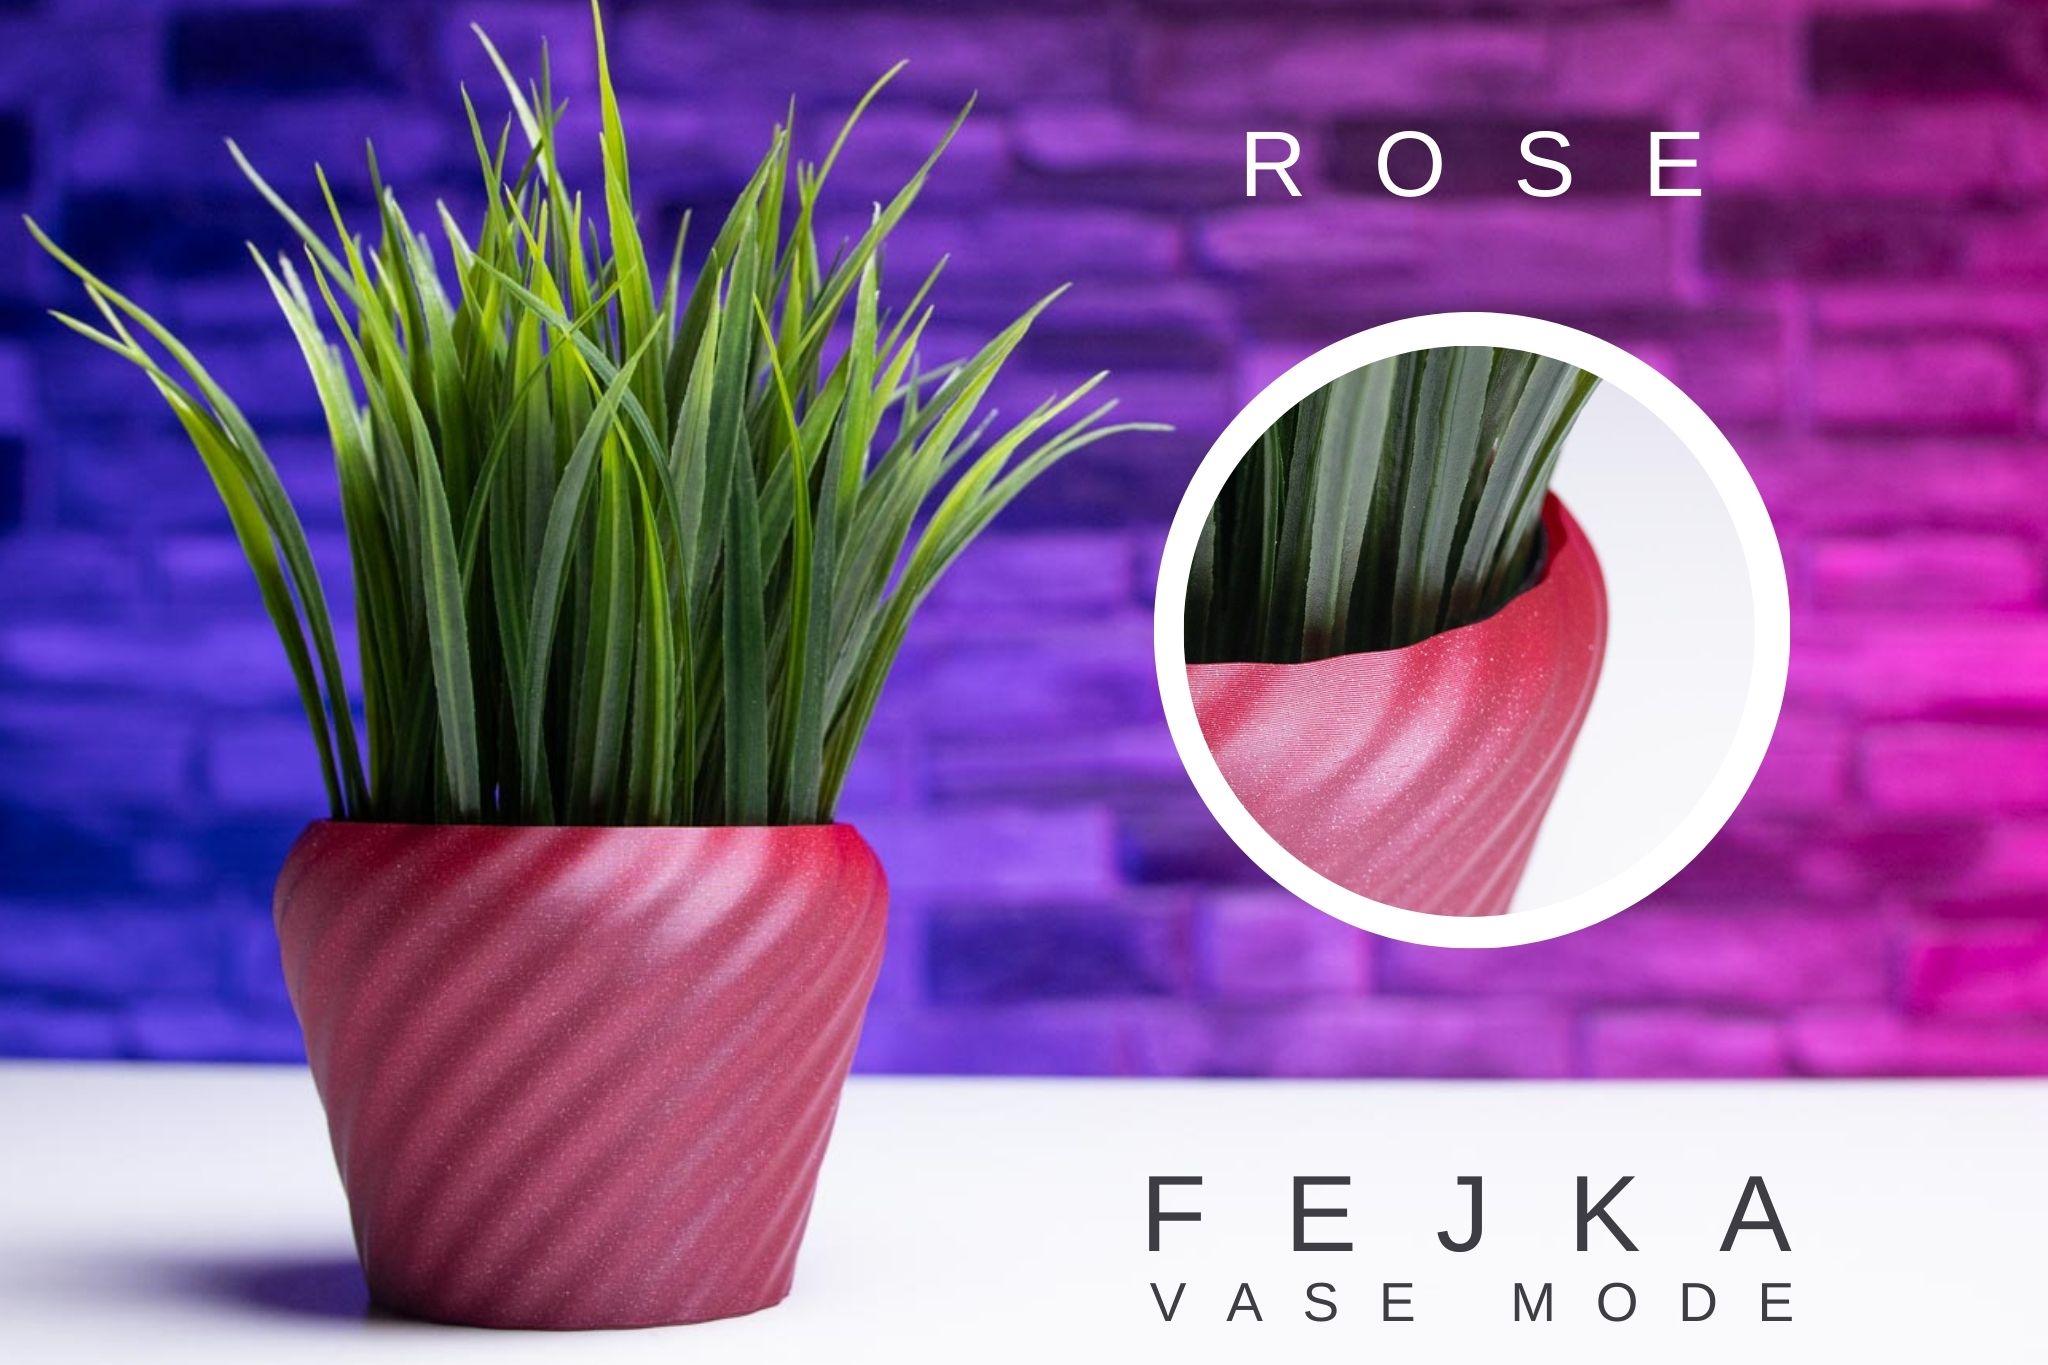 3D Printed Planter and Pot for Ikea Fejka - Vase ROSE